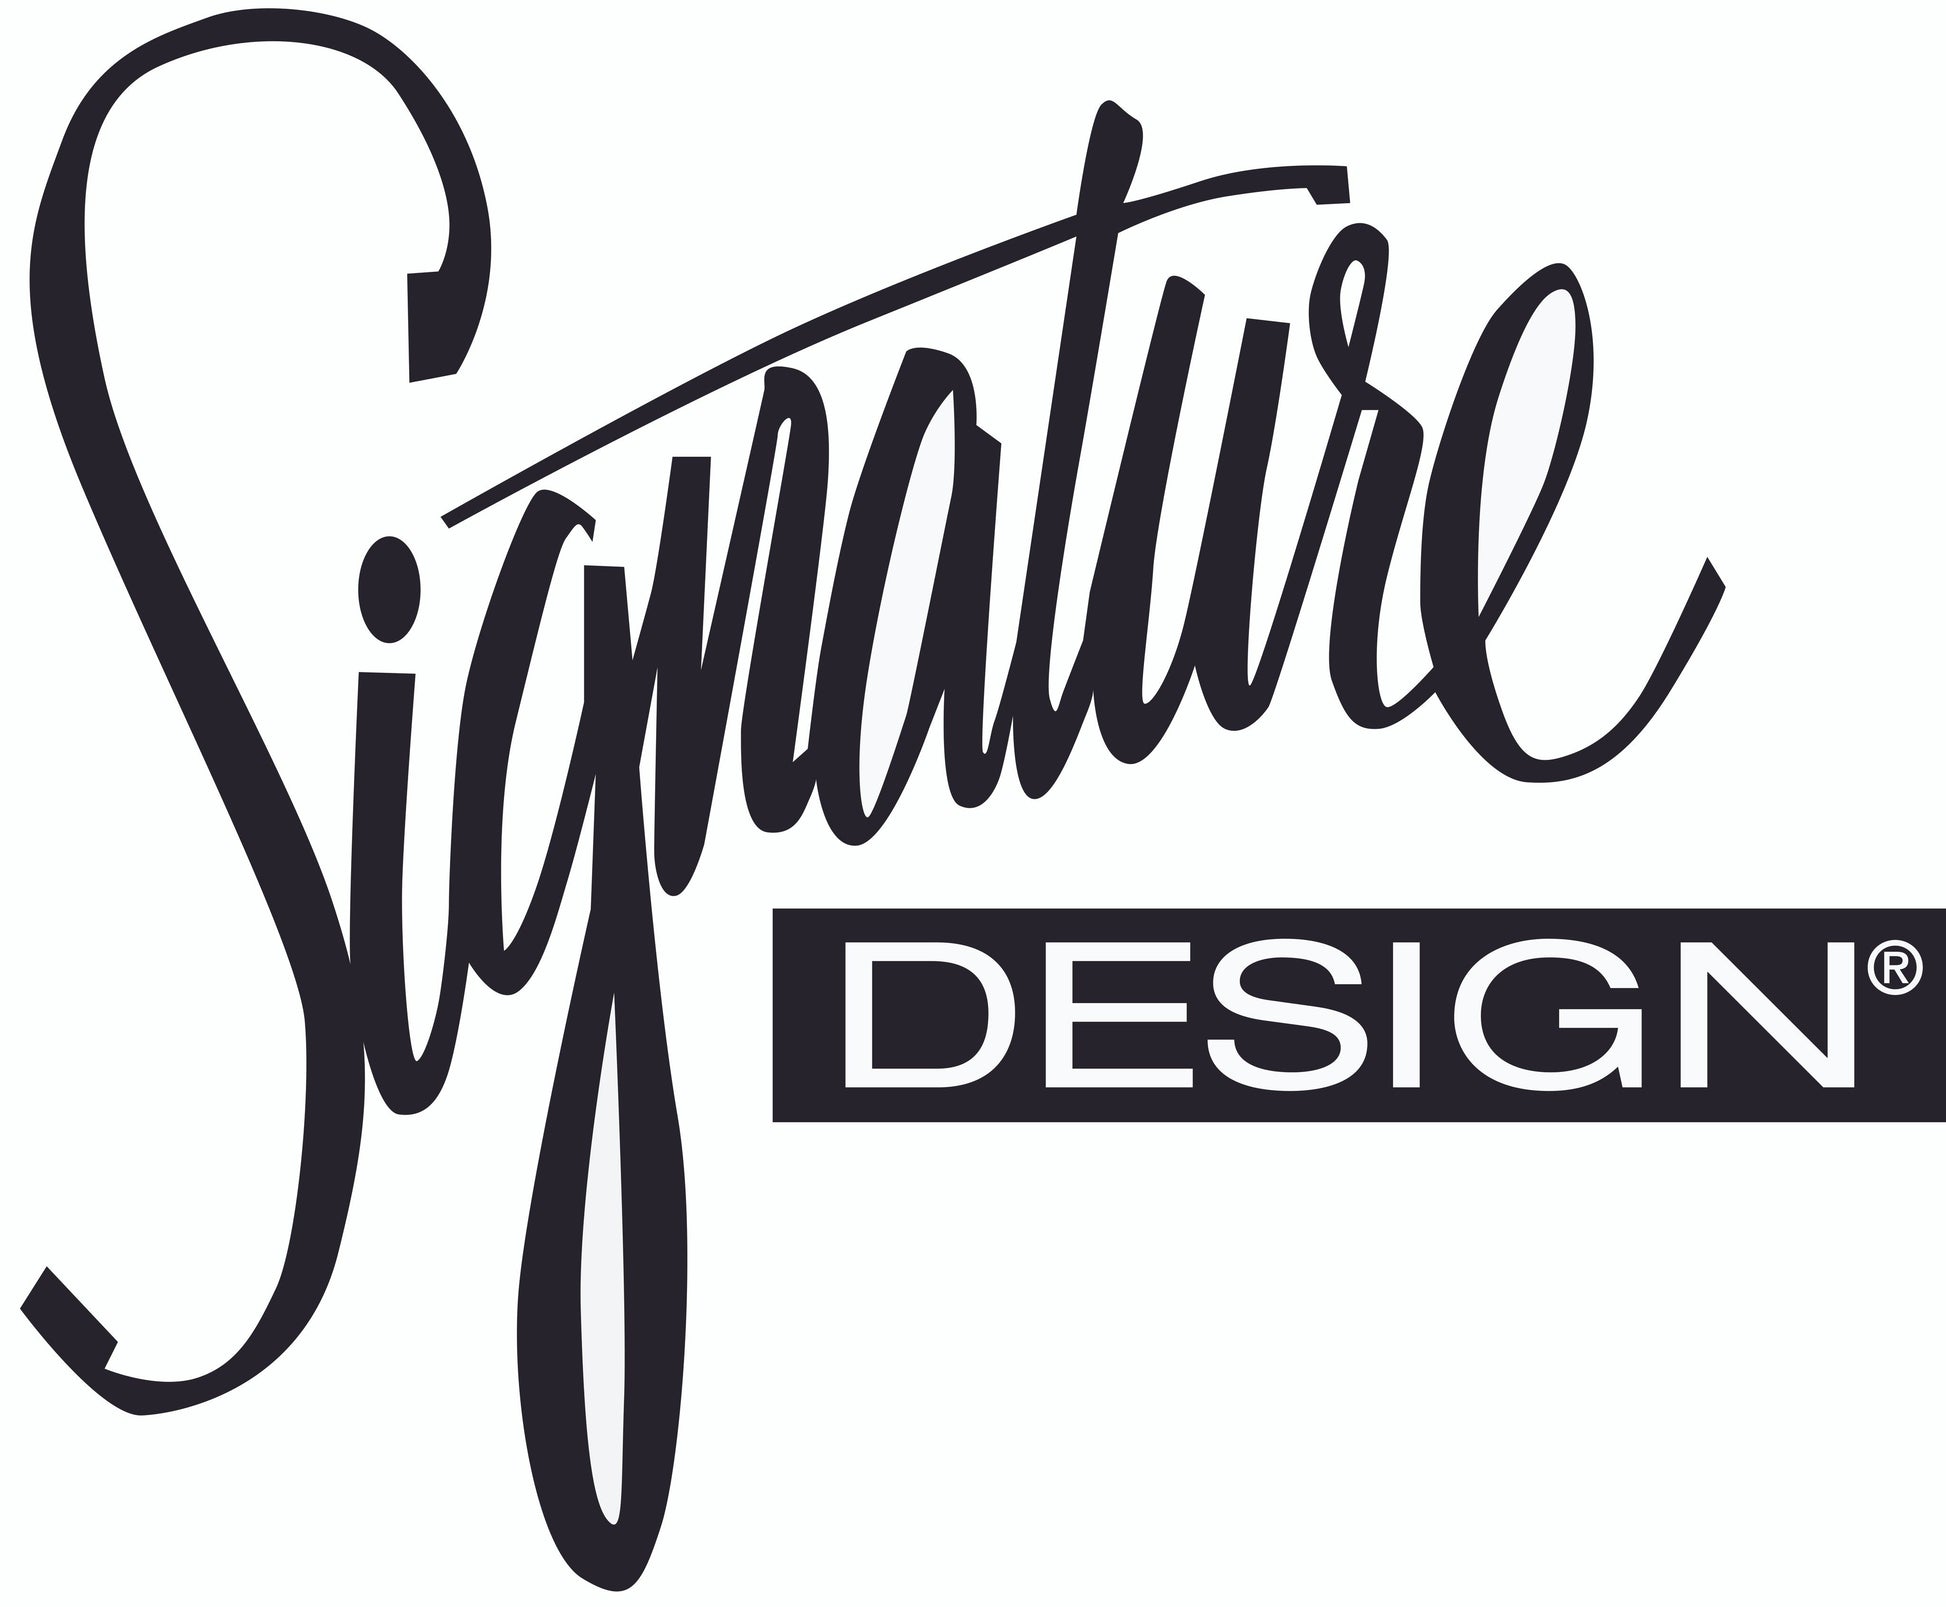 Tobbinsen Metal Table Lamp (1/CN) Signature Design by Ashley®